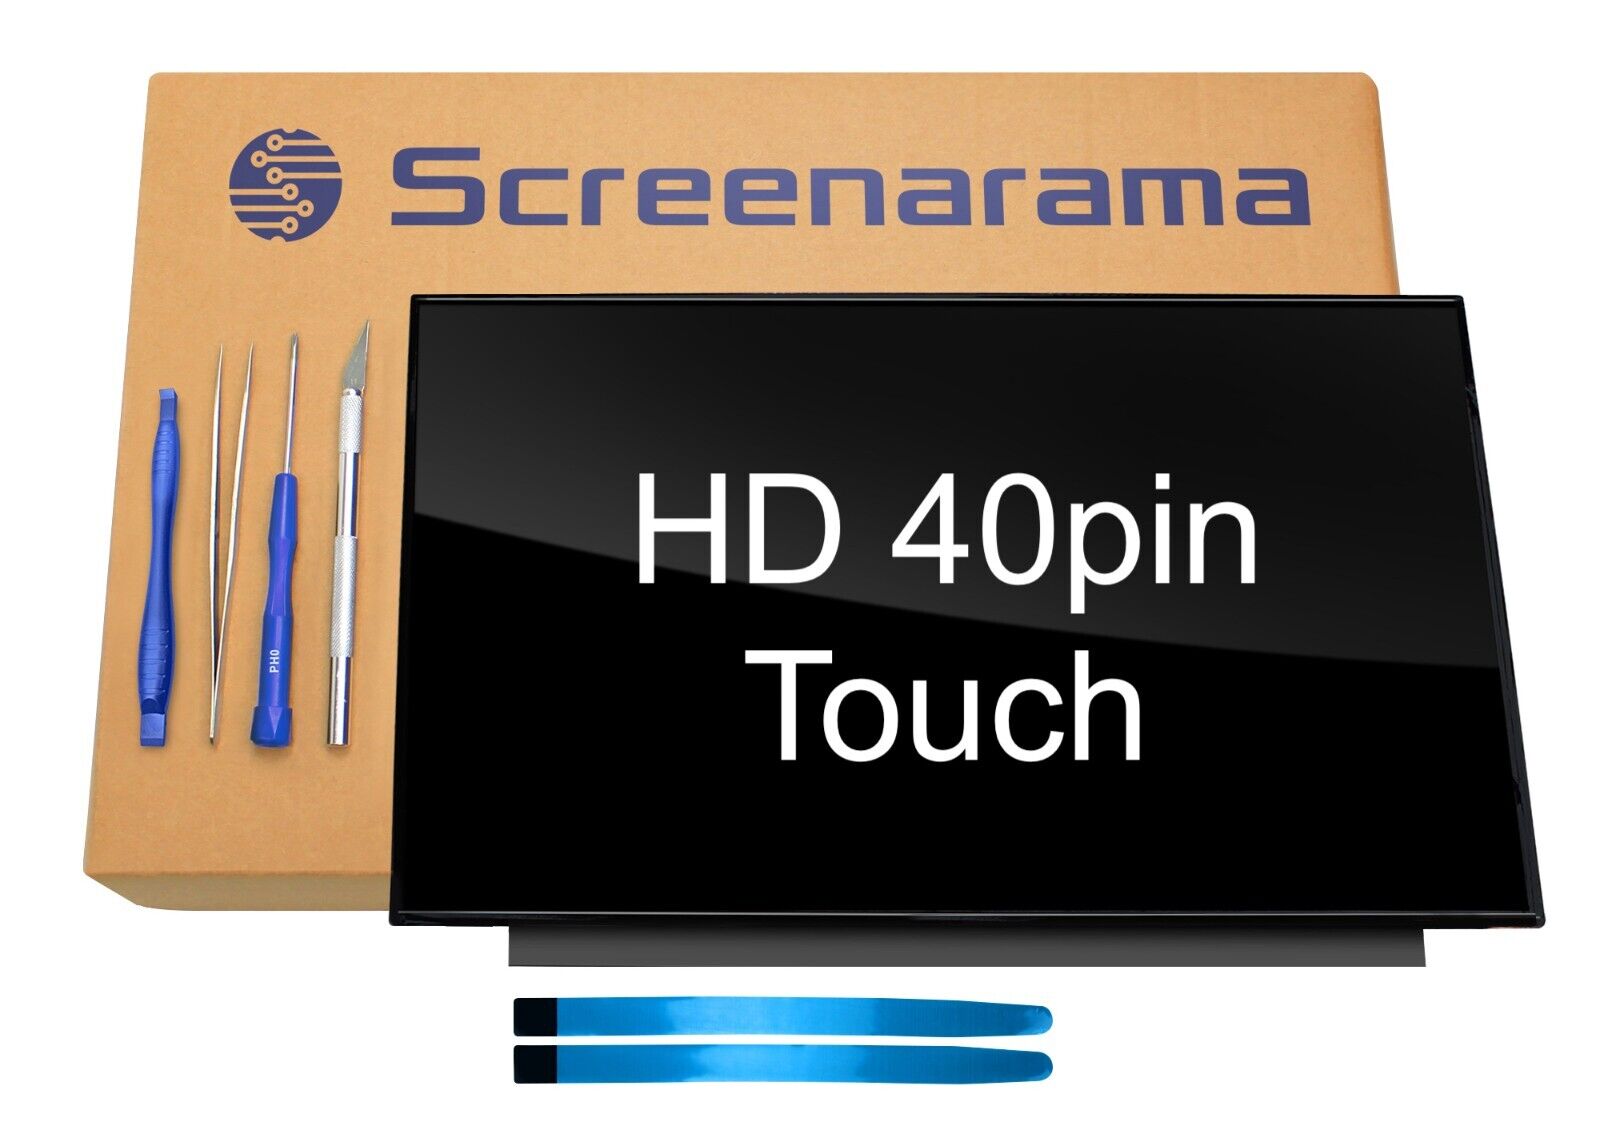 HP 14-DQ2032WM 14-DQ2013DX HD 40pin LCD Touch Screen + Tools SCREENARAMA * FAST